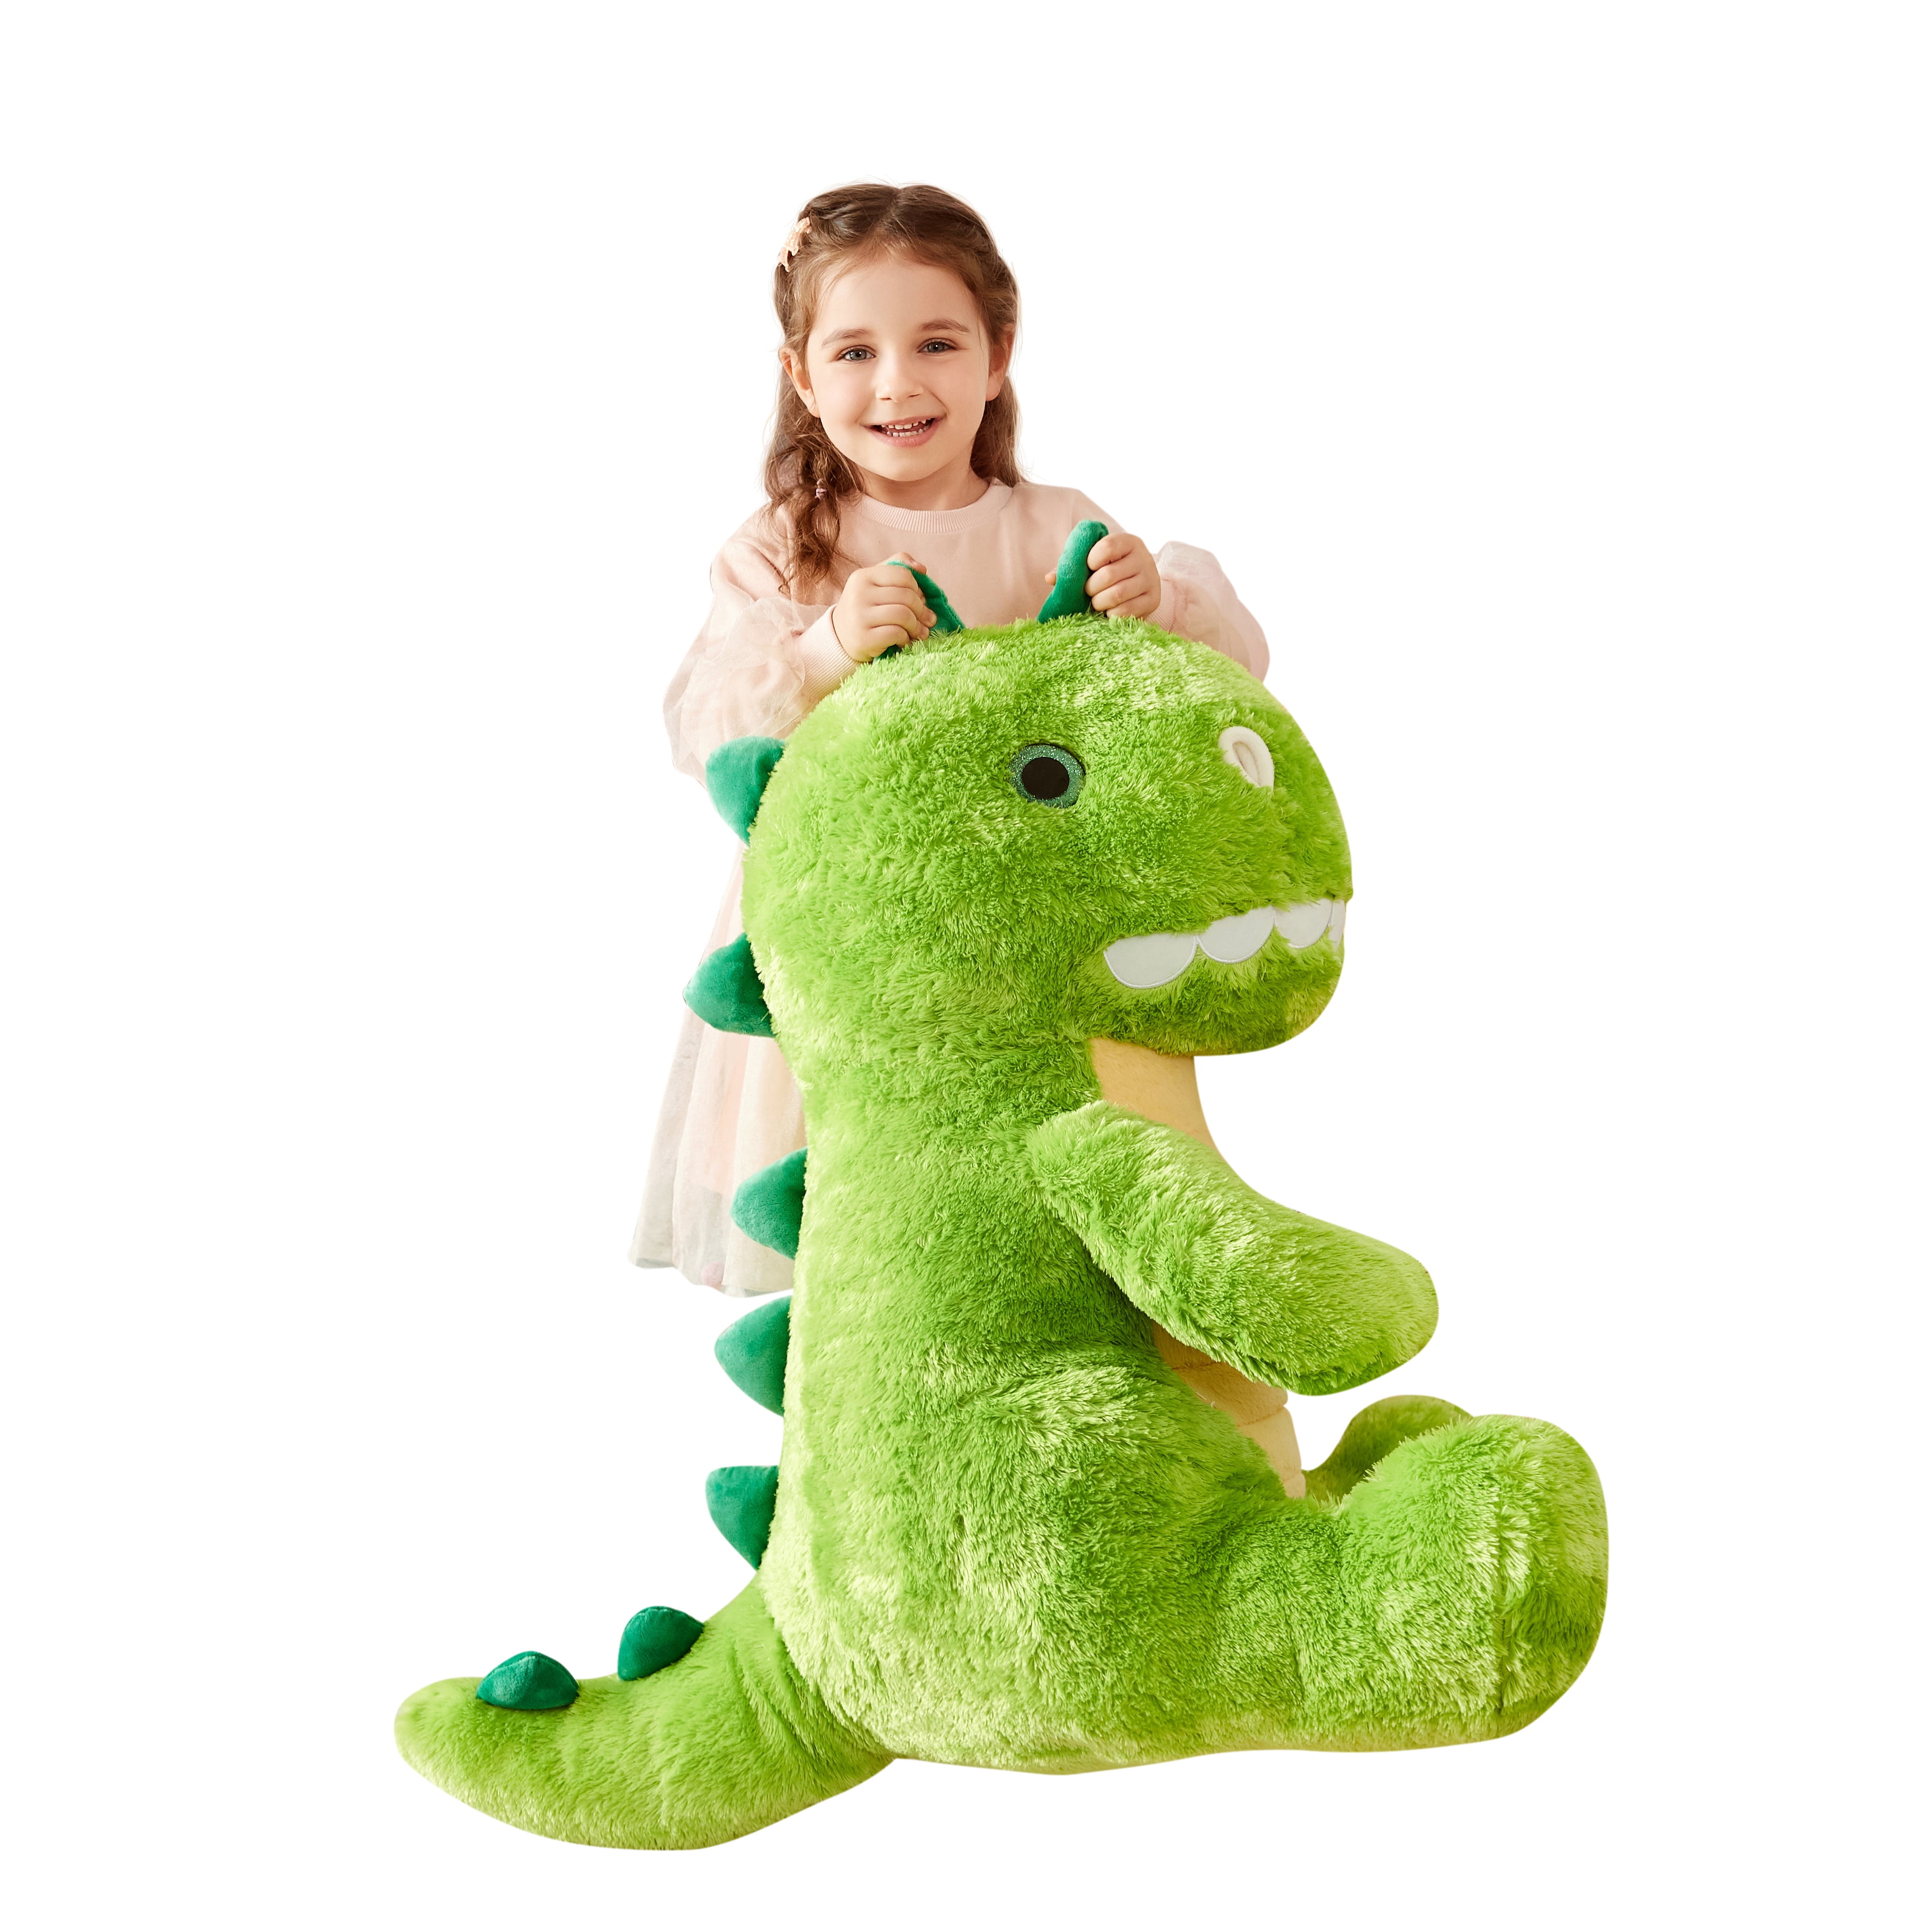 IKASA Giant Dinosaur Stuffed Animal Plush Toy,Large Jumbo Dinosaur